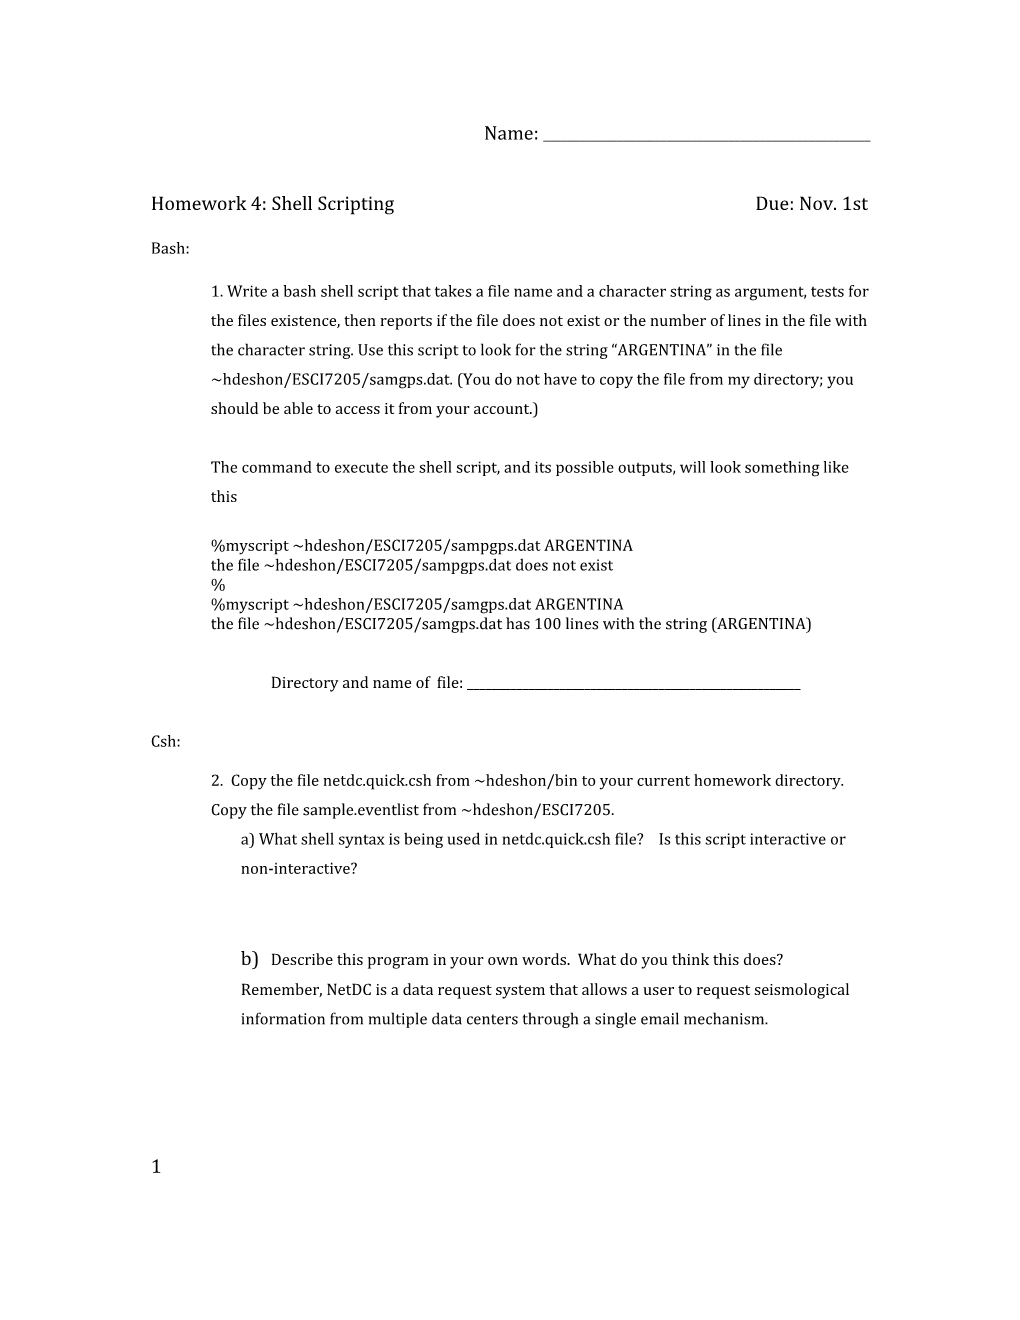 Homework4: Shell Scripting Due: Nov. 1St